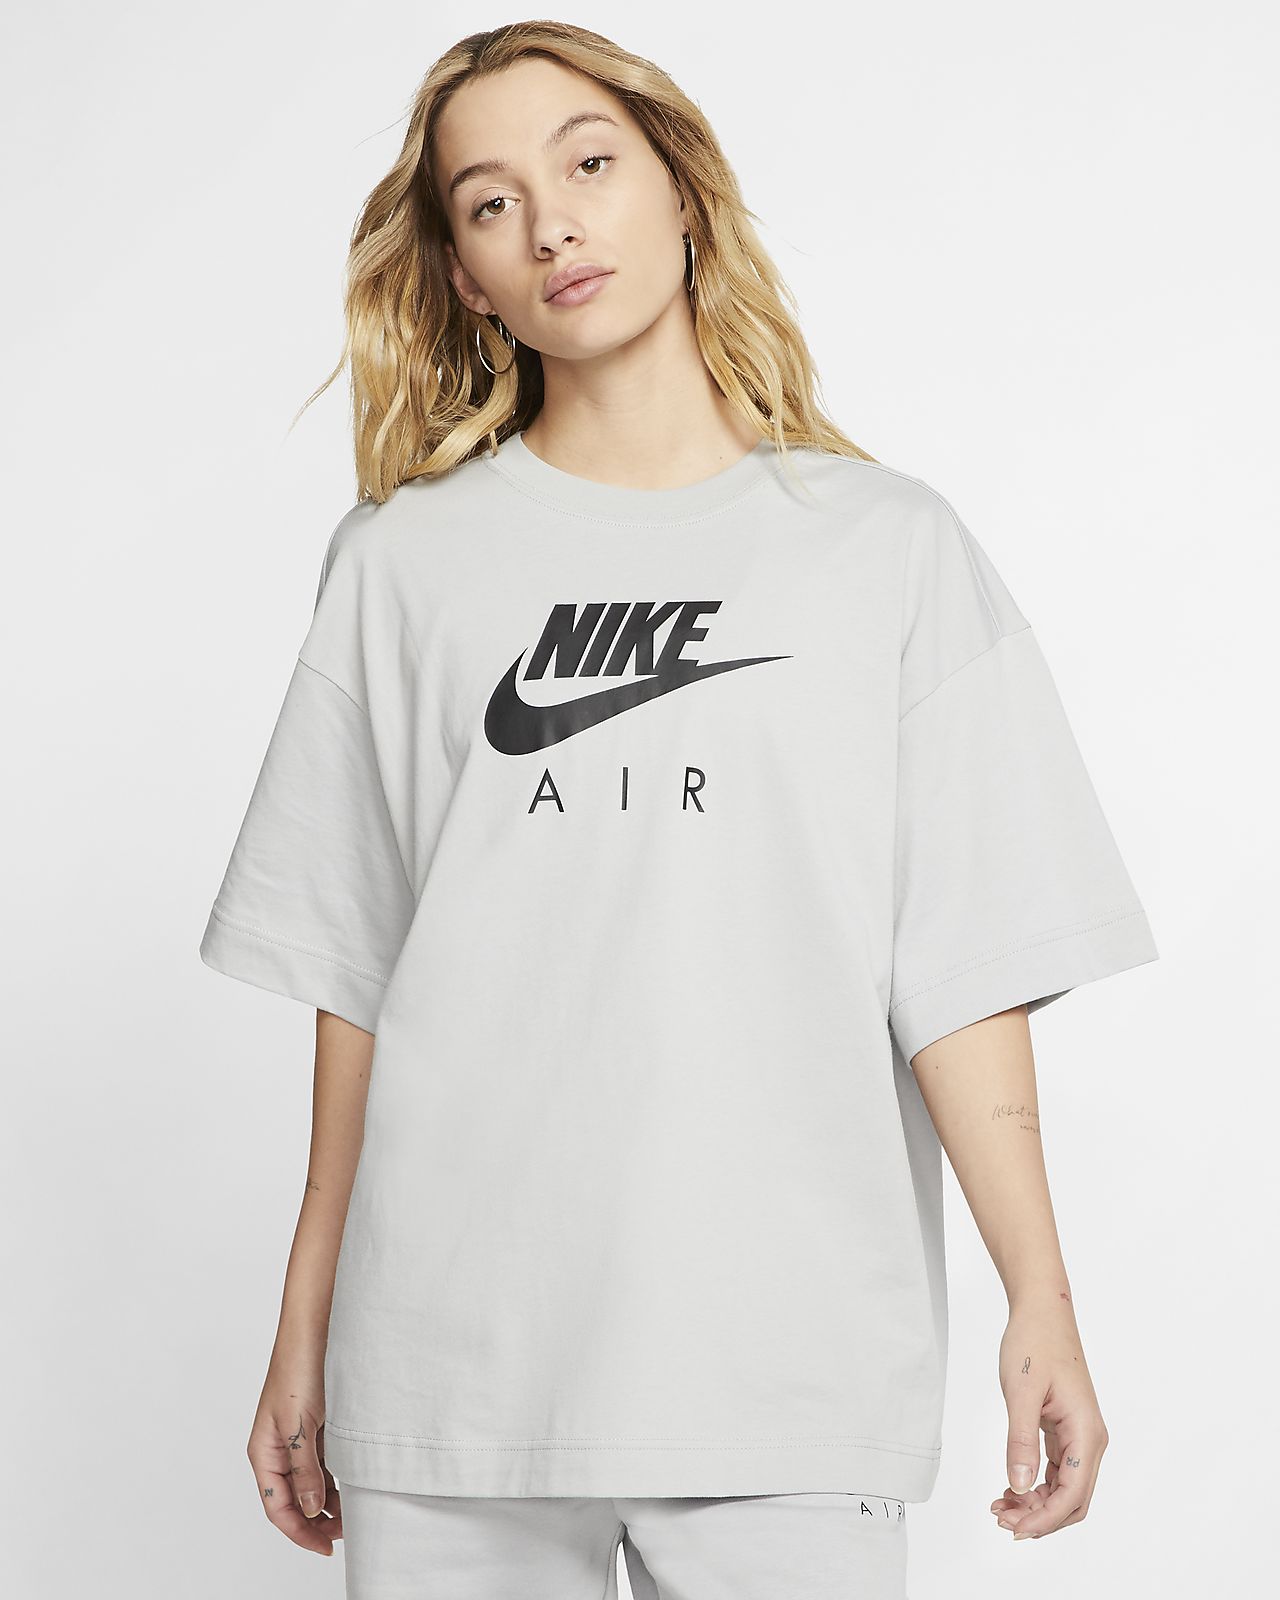 Nike Air Women's Short-Sleeve Top. Nike GB